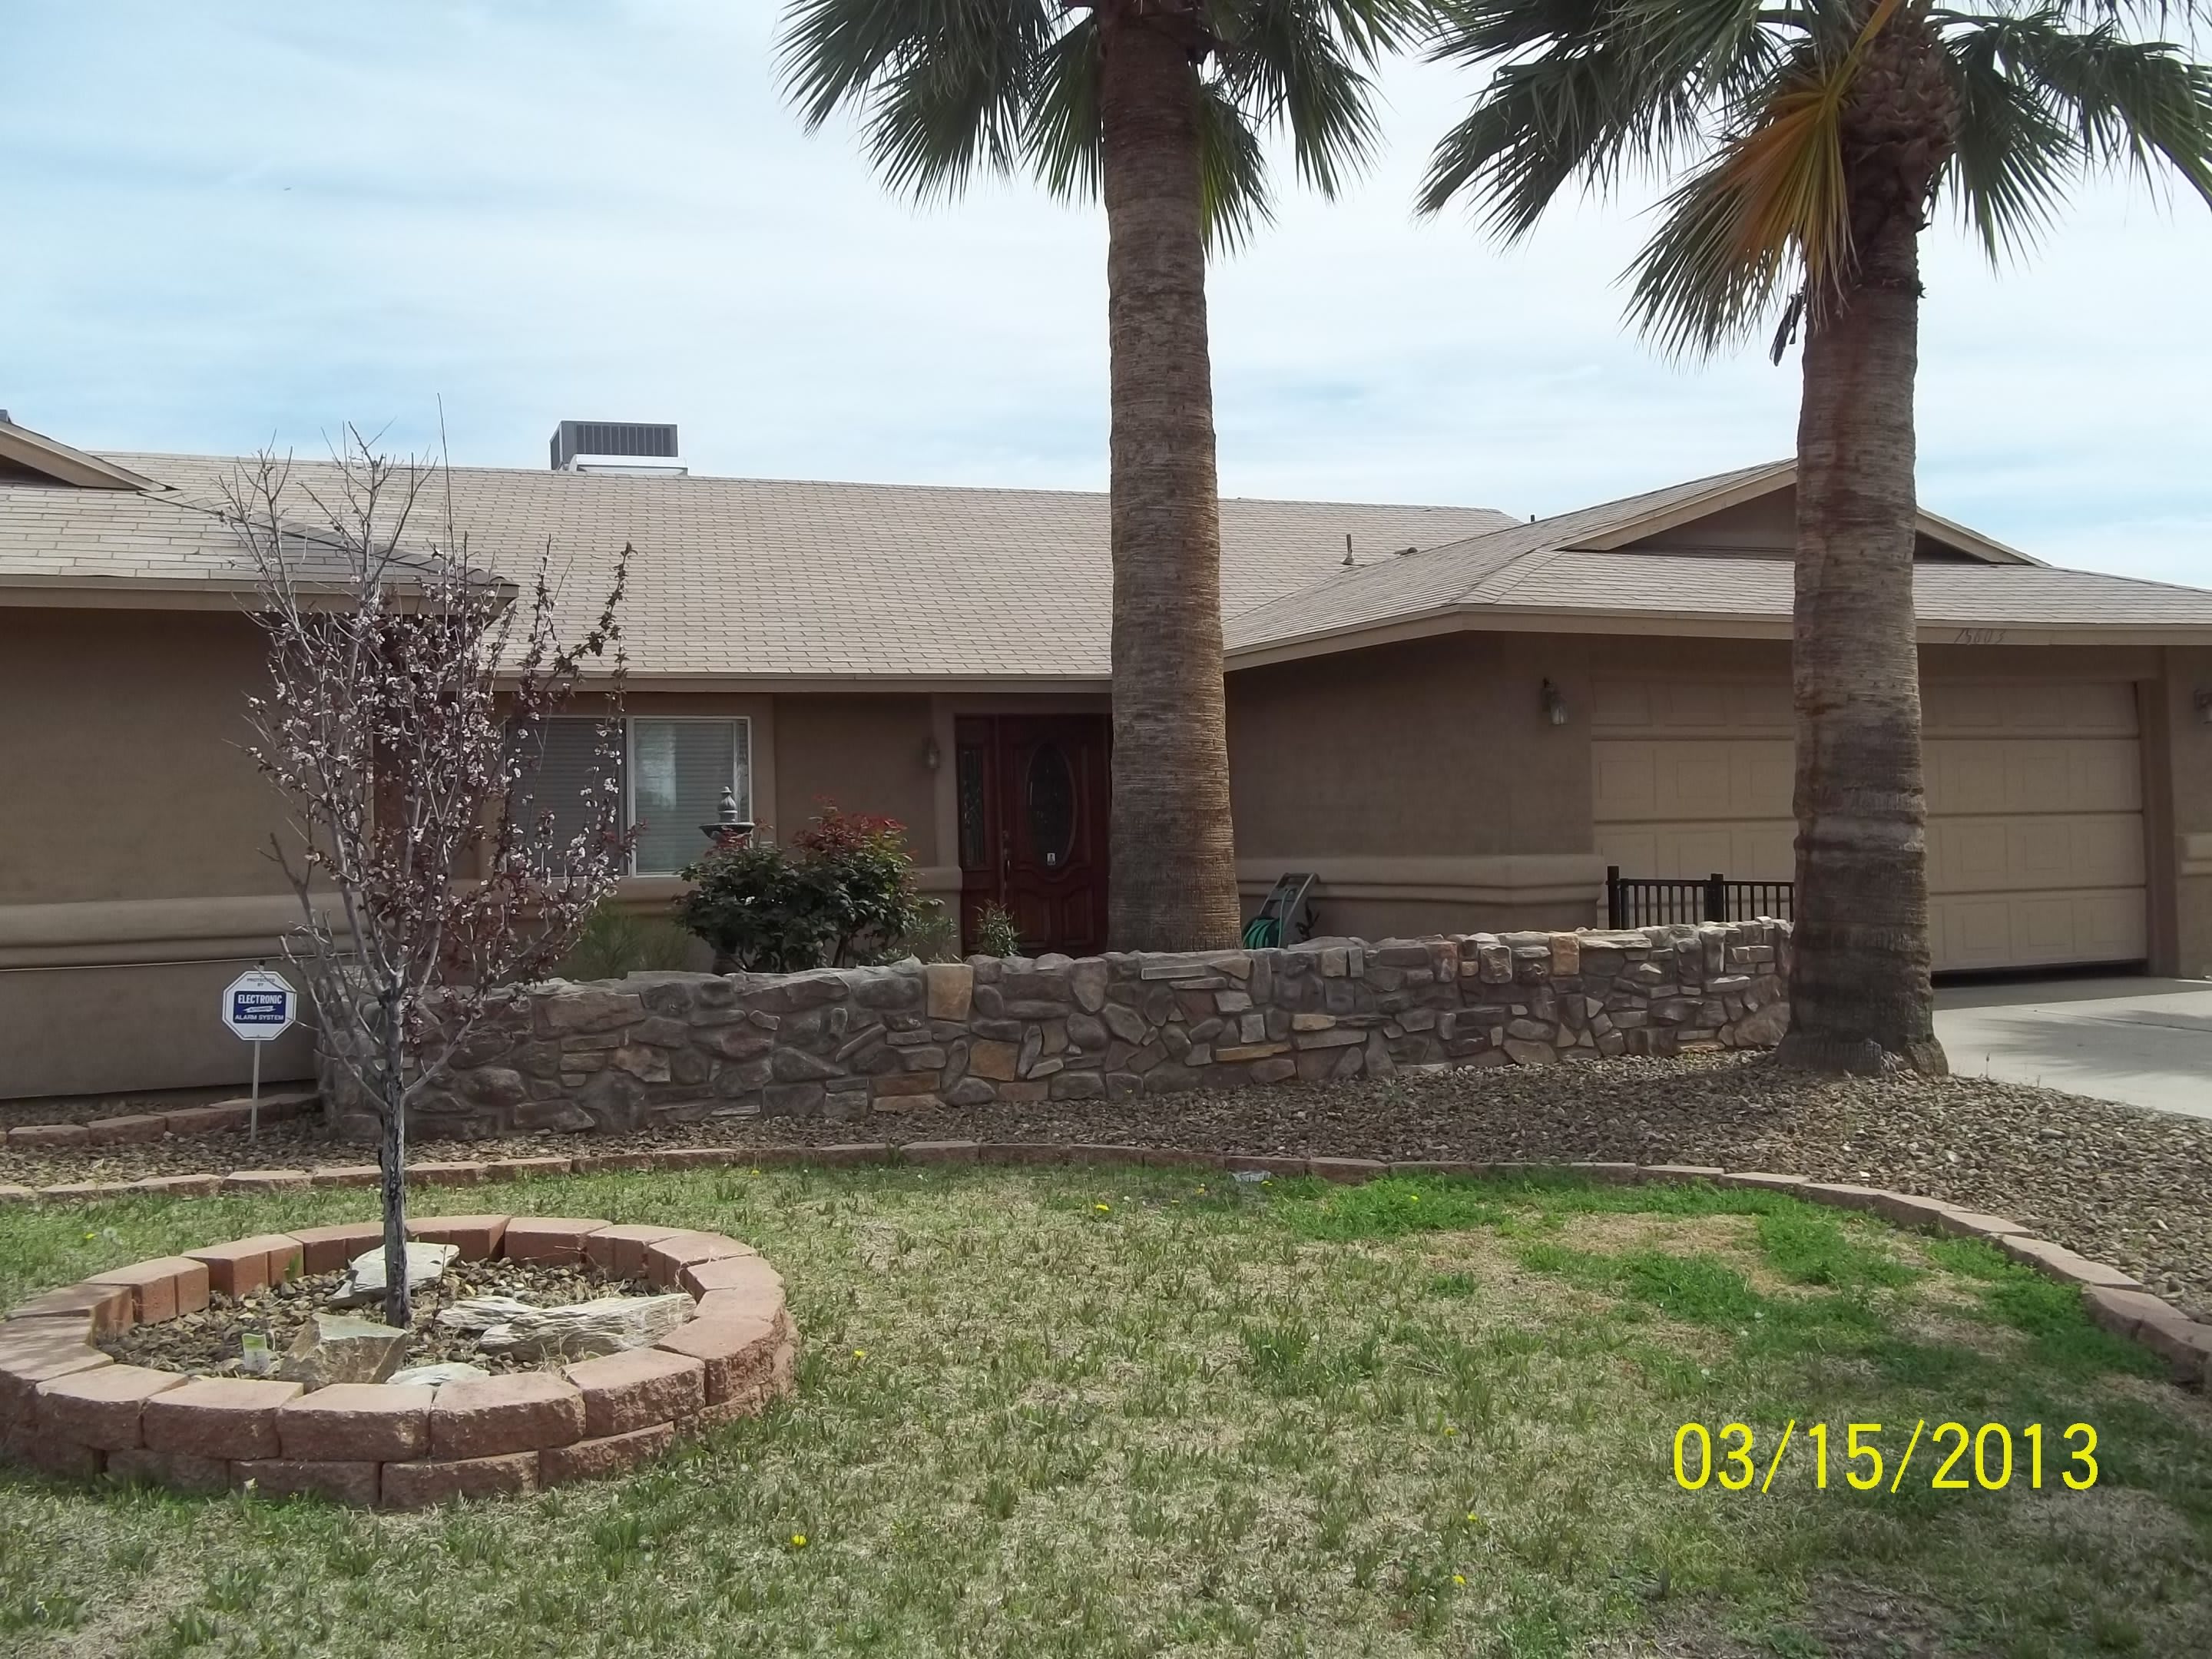 Photo of Shadow Ridge Adult Care Home